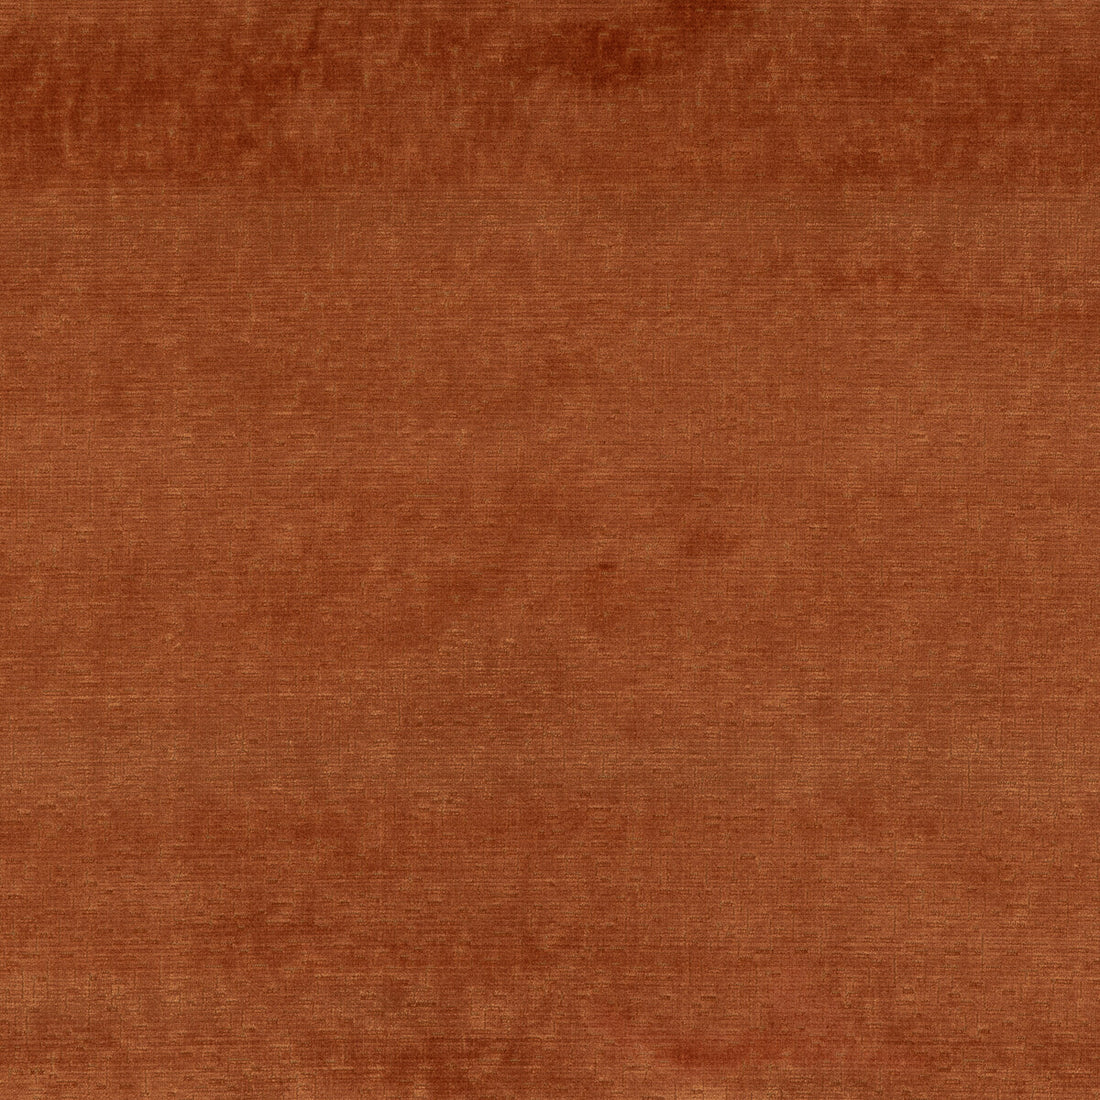 Alma Velvet fabric in spice color - pattern BF10827.330.0 - by G P &amp; J Baker in the Coromandel Velvets collection